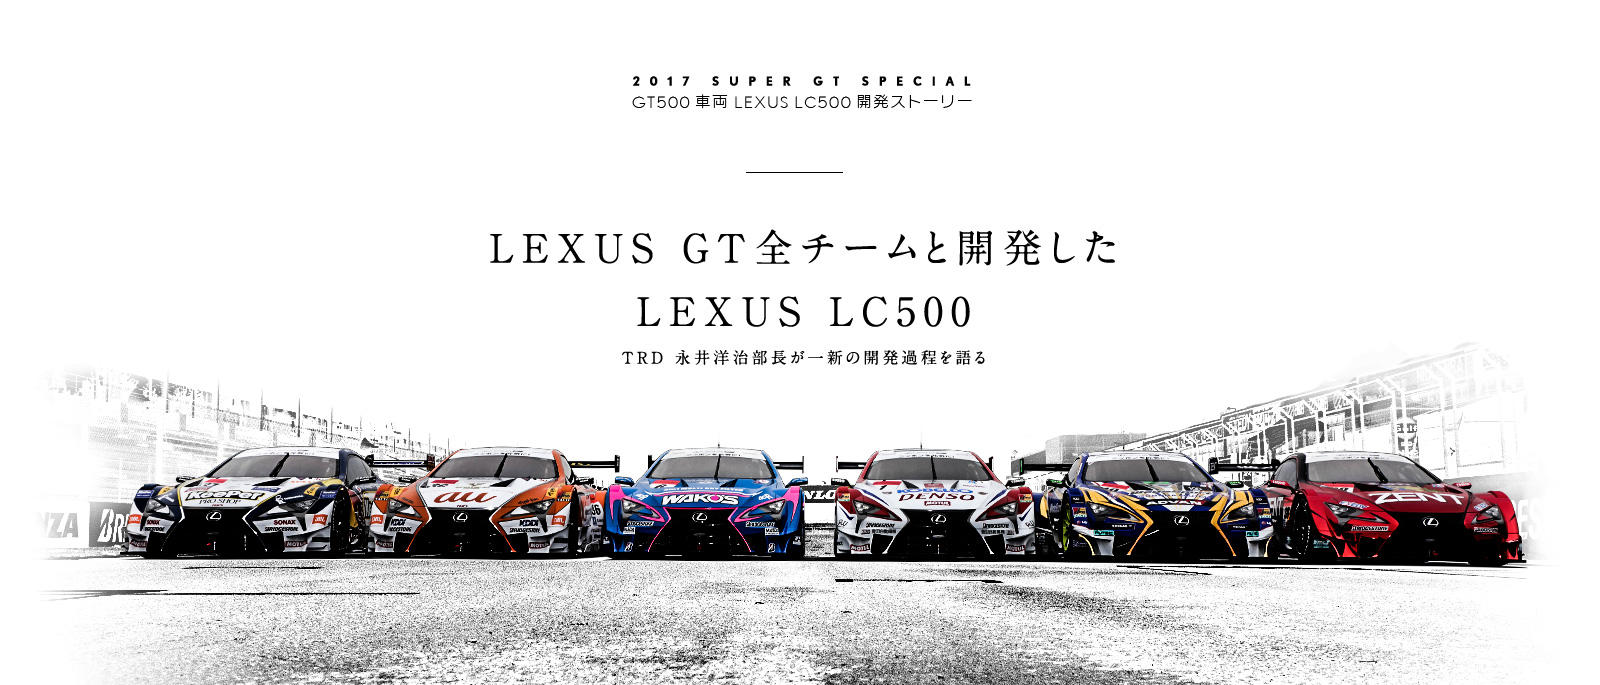 GT500車両 LEXUS LC500開発ストーリー「LEXUS GT全チームと開発した LEXUS LC500」